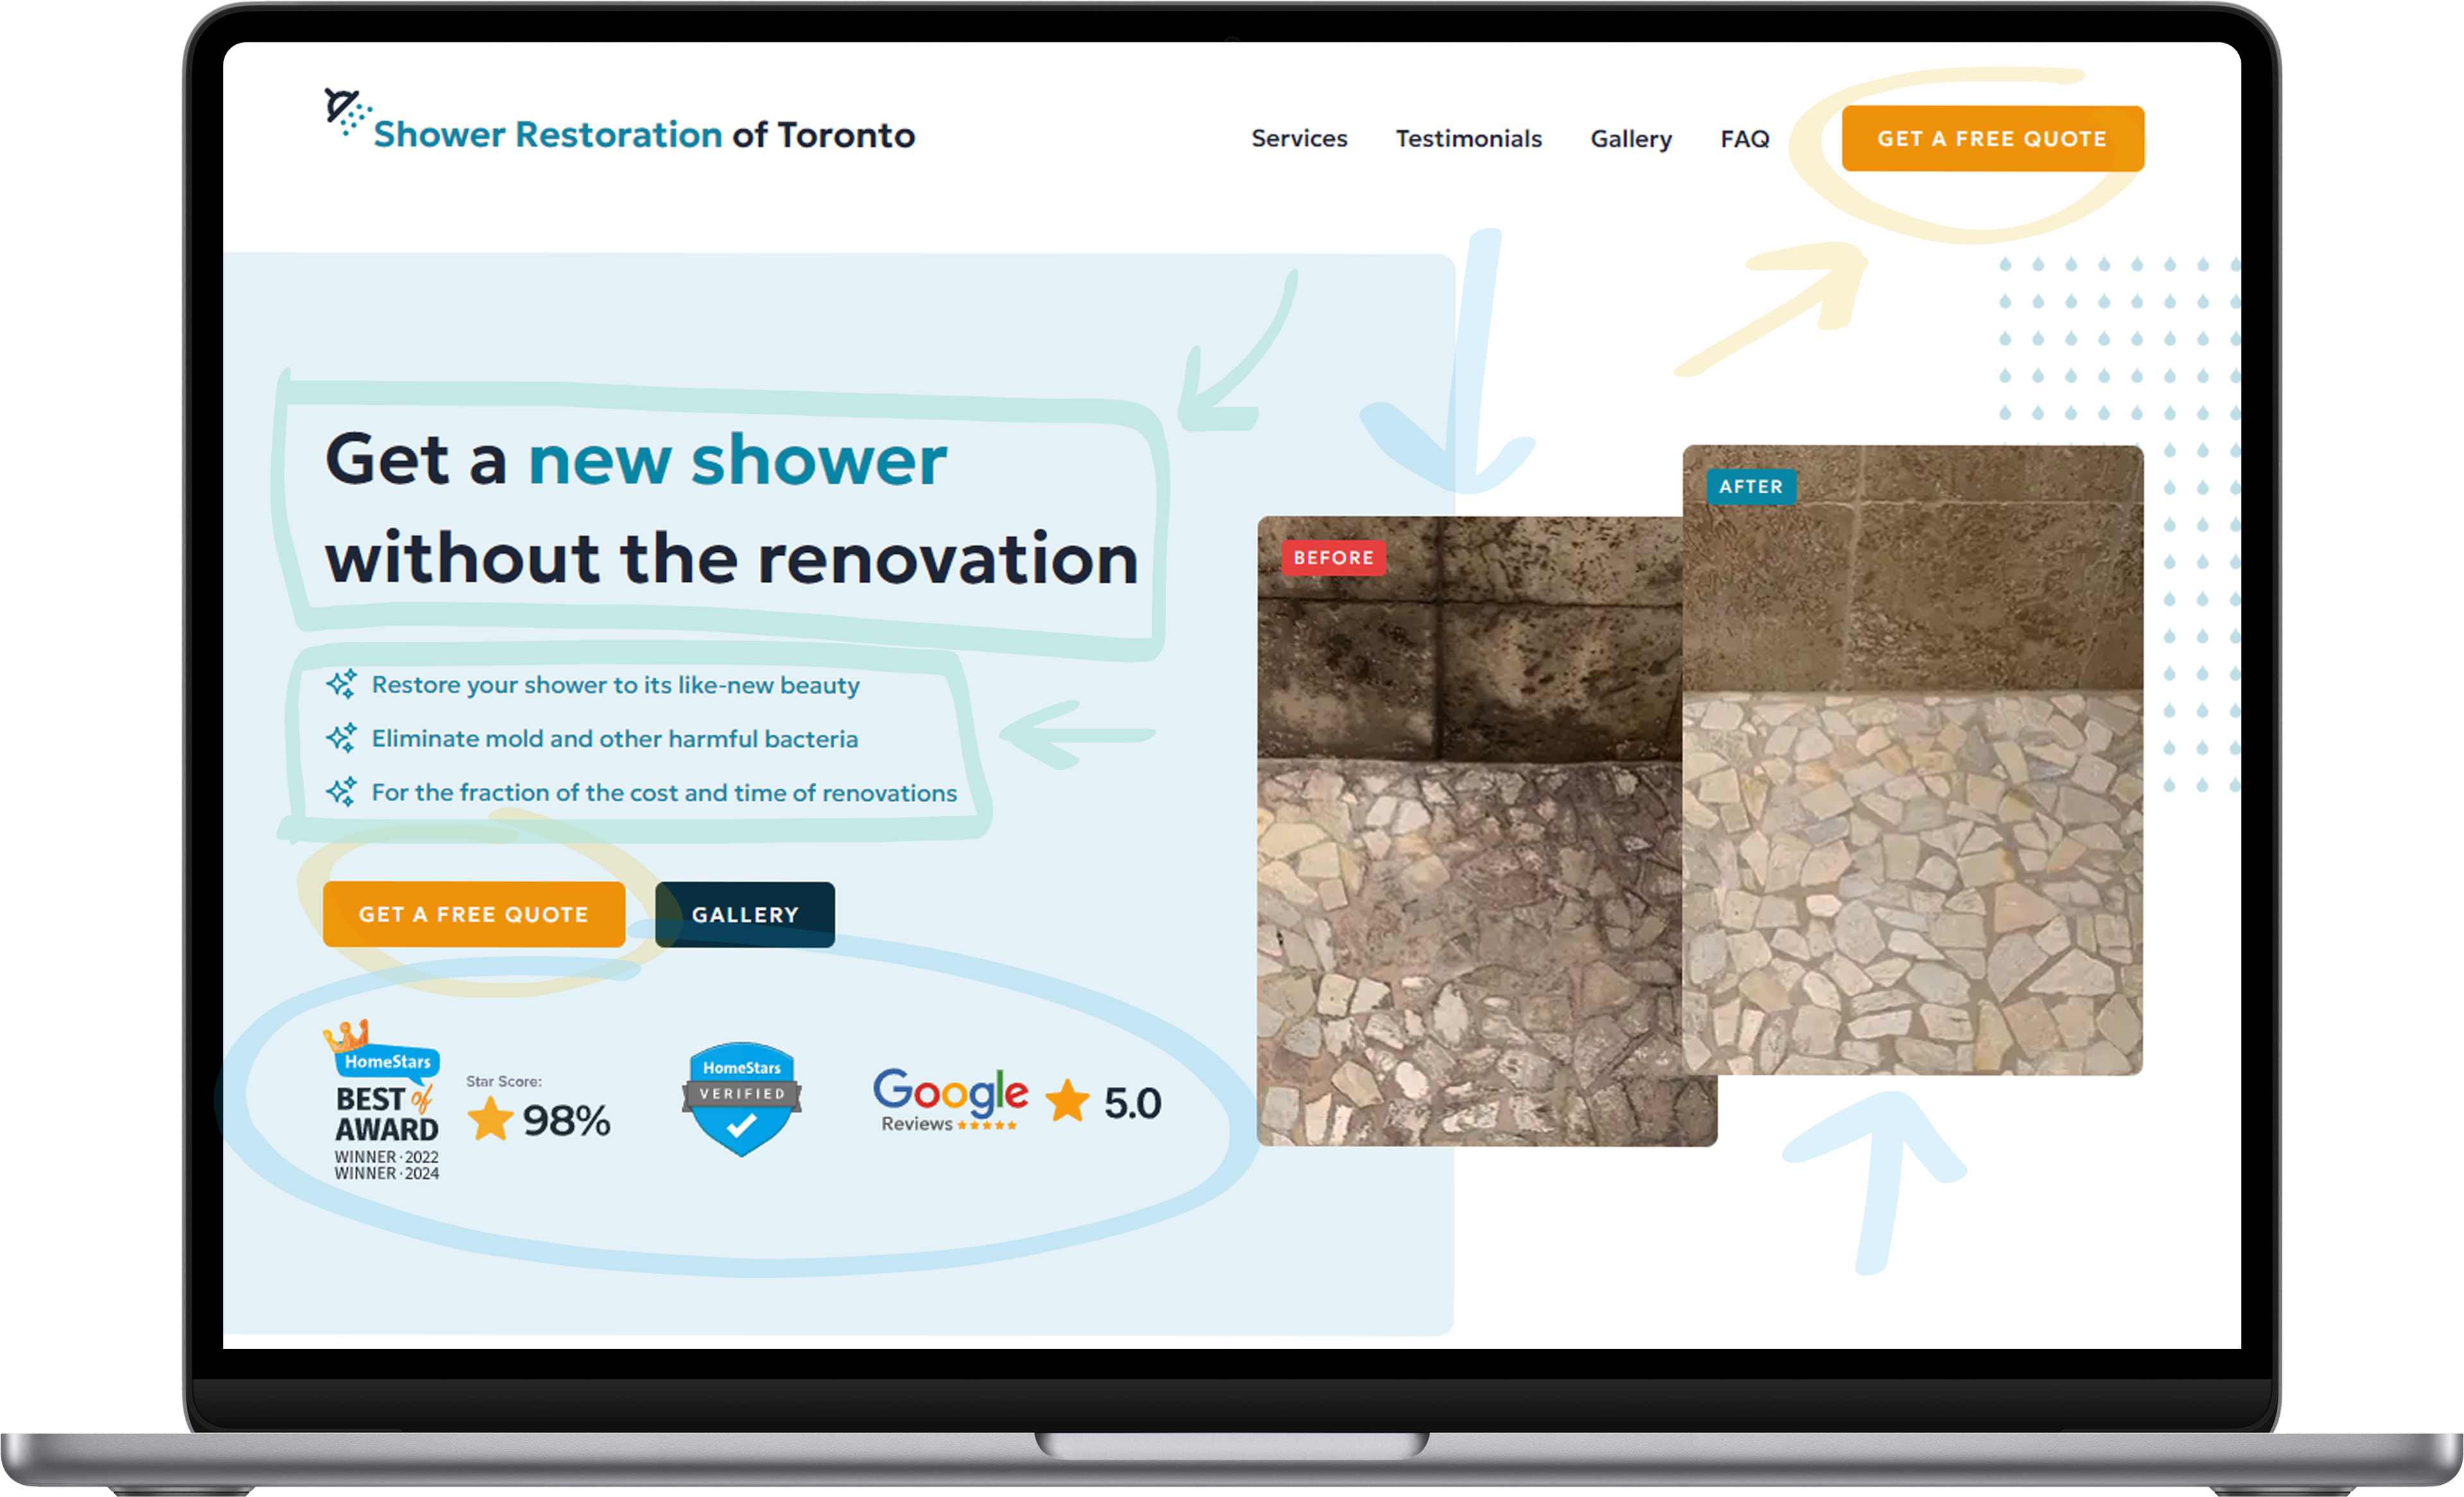 Shower Restoration of Toronto website highlights